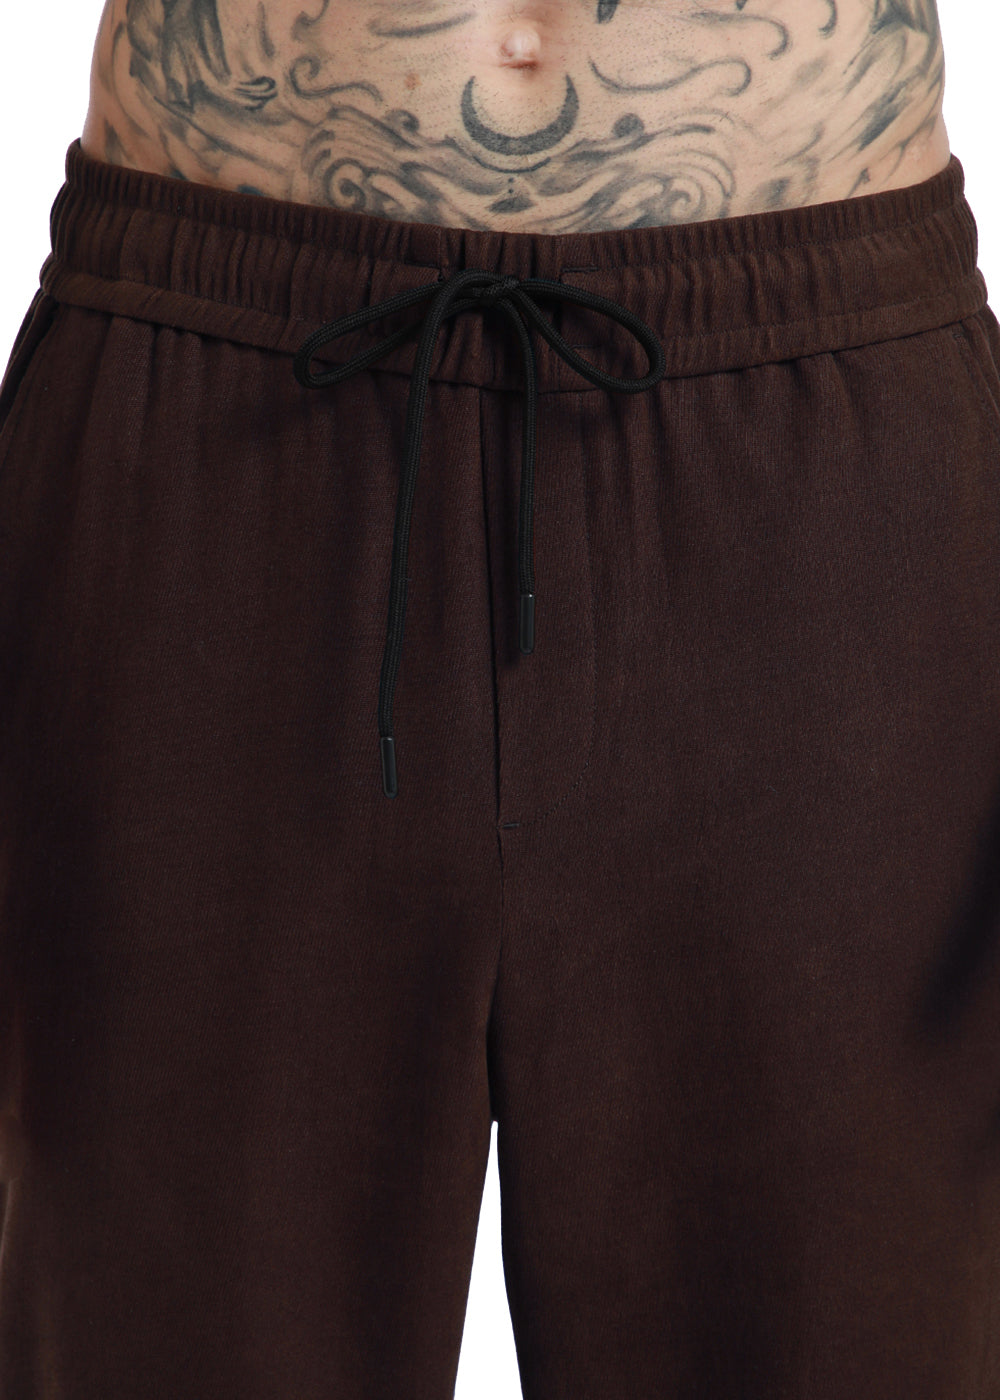 Chocolate Brown Thin-Corduroy Trousers